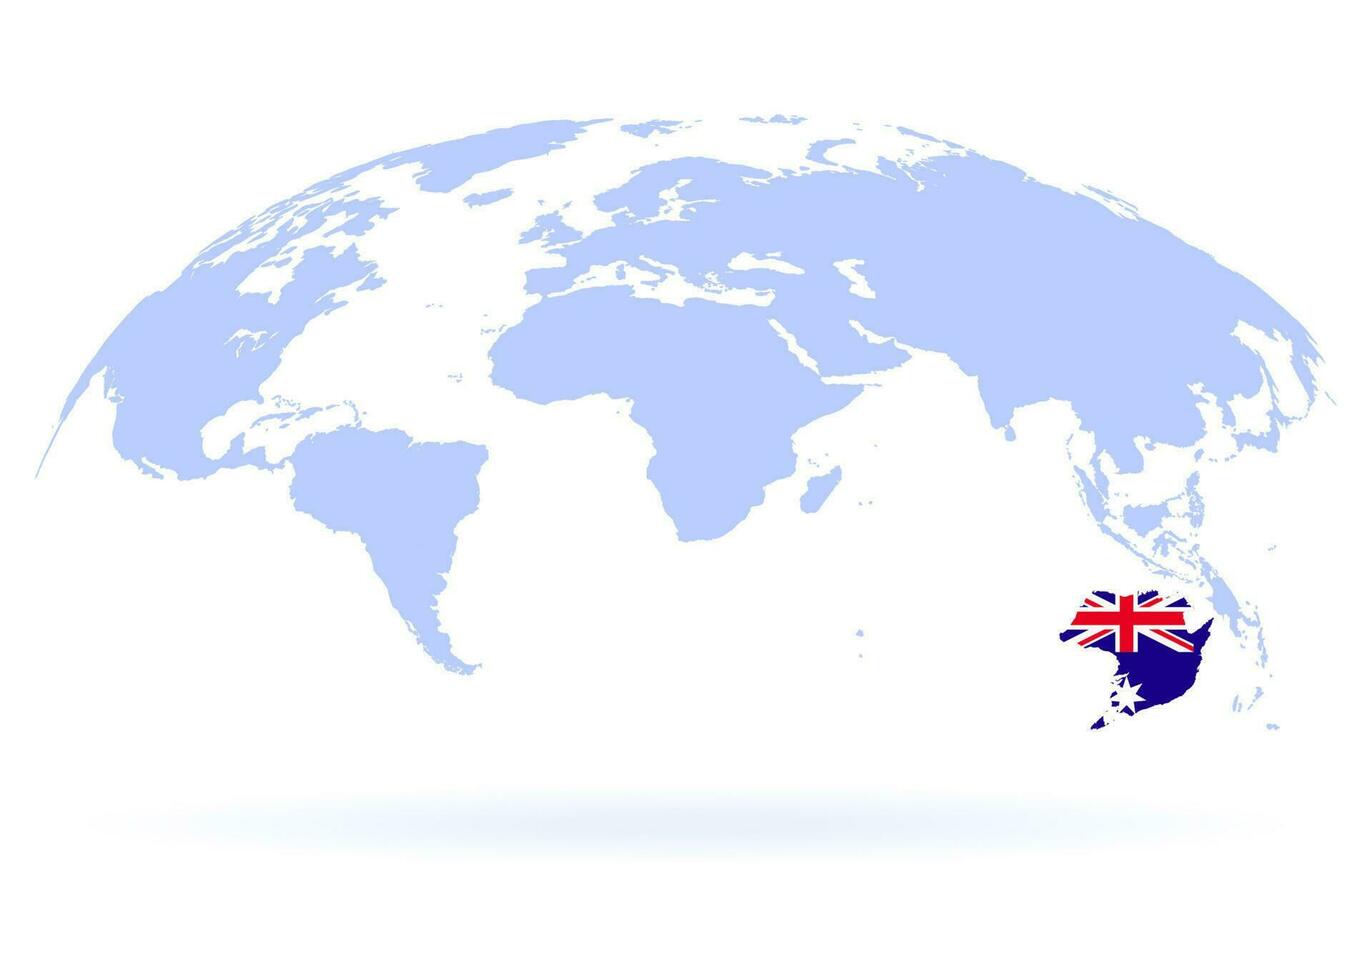 Planet Earth. Flag of Australia. The Earth, World Map on white background. Vector illustration. EPS 10